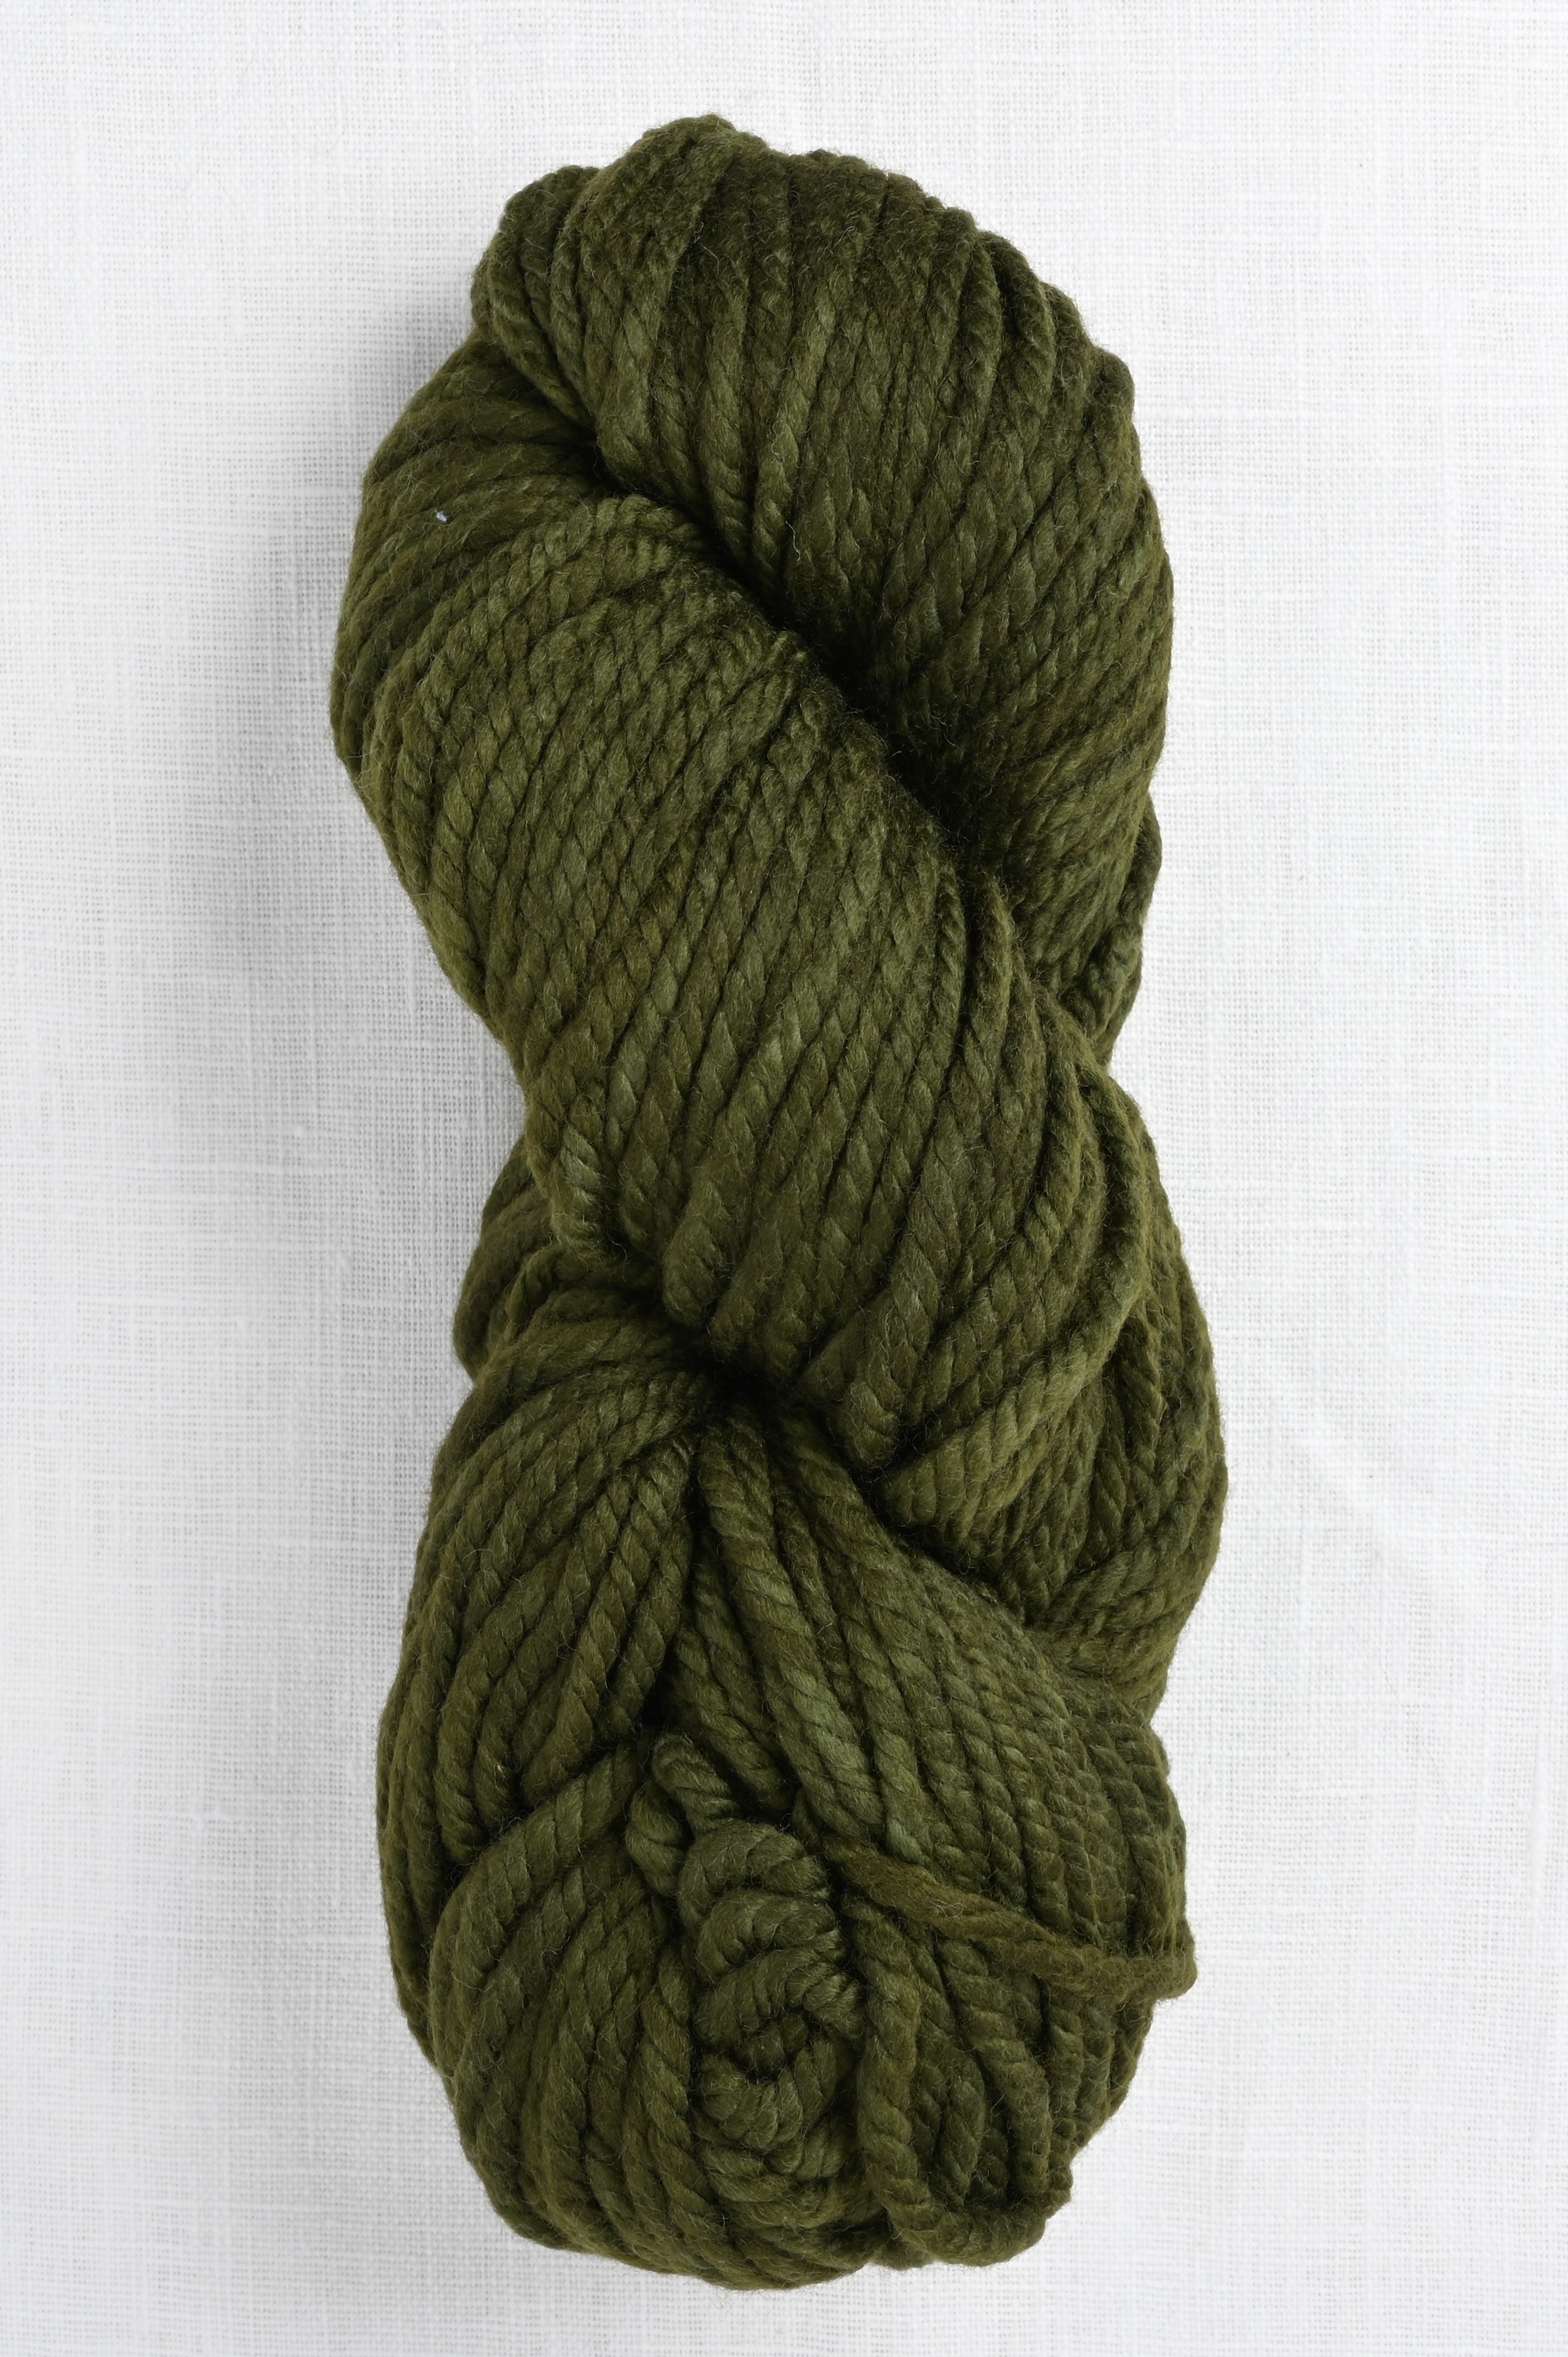 Malabrigo Worsted in color Olive, #056, Merino Wool Aran Weight Knitting  Yarn, deep olive green